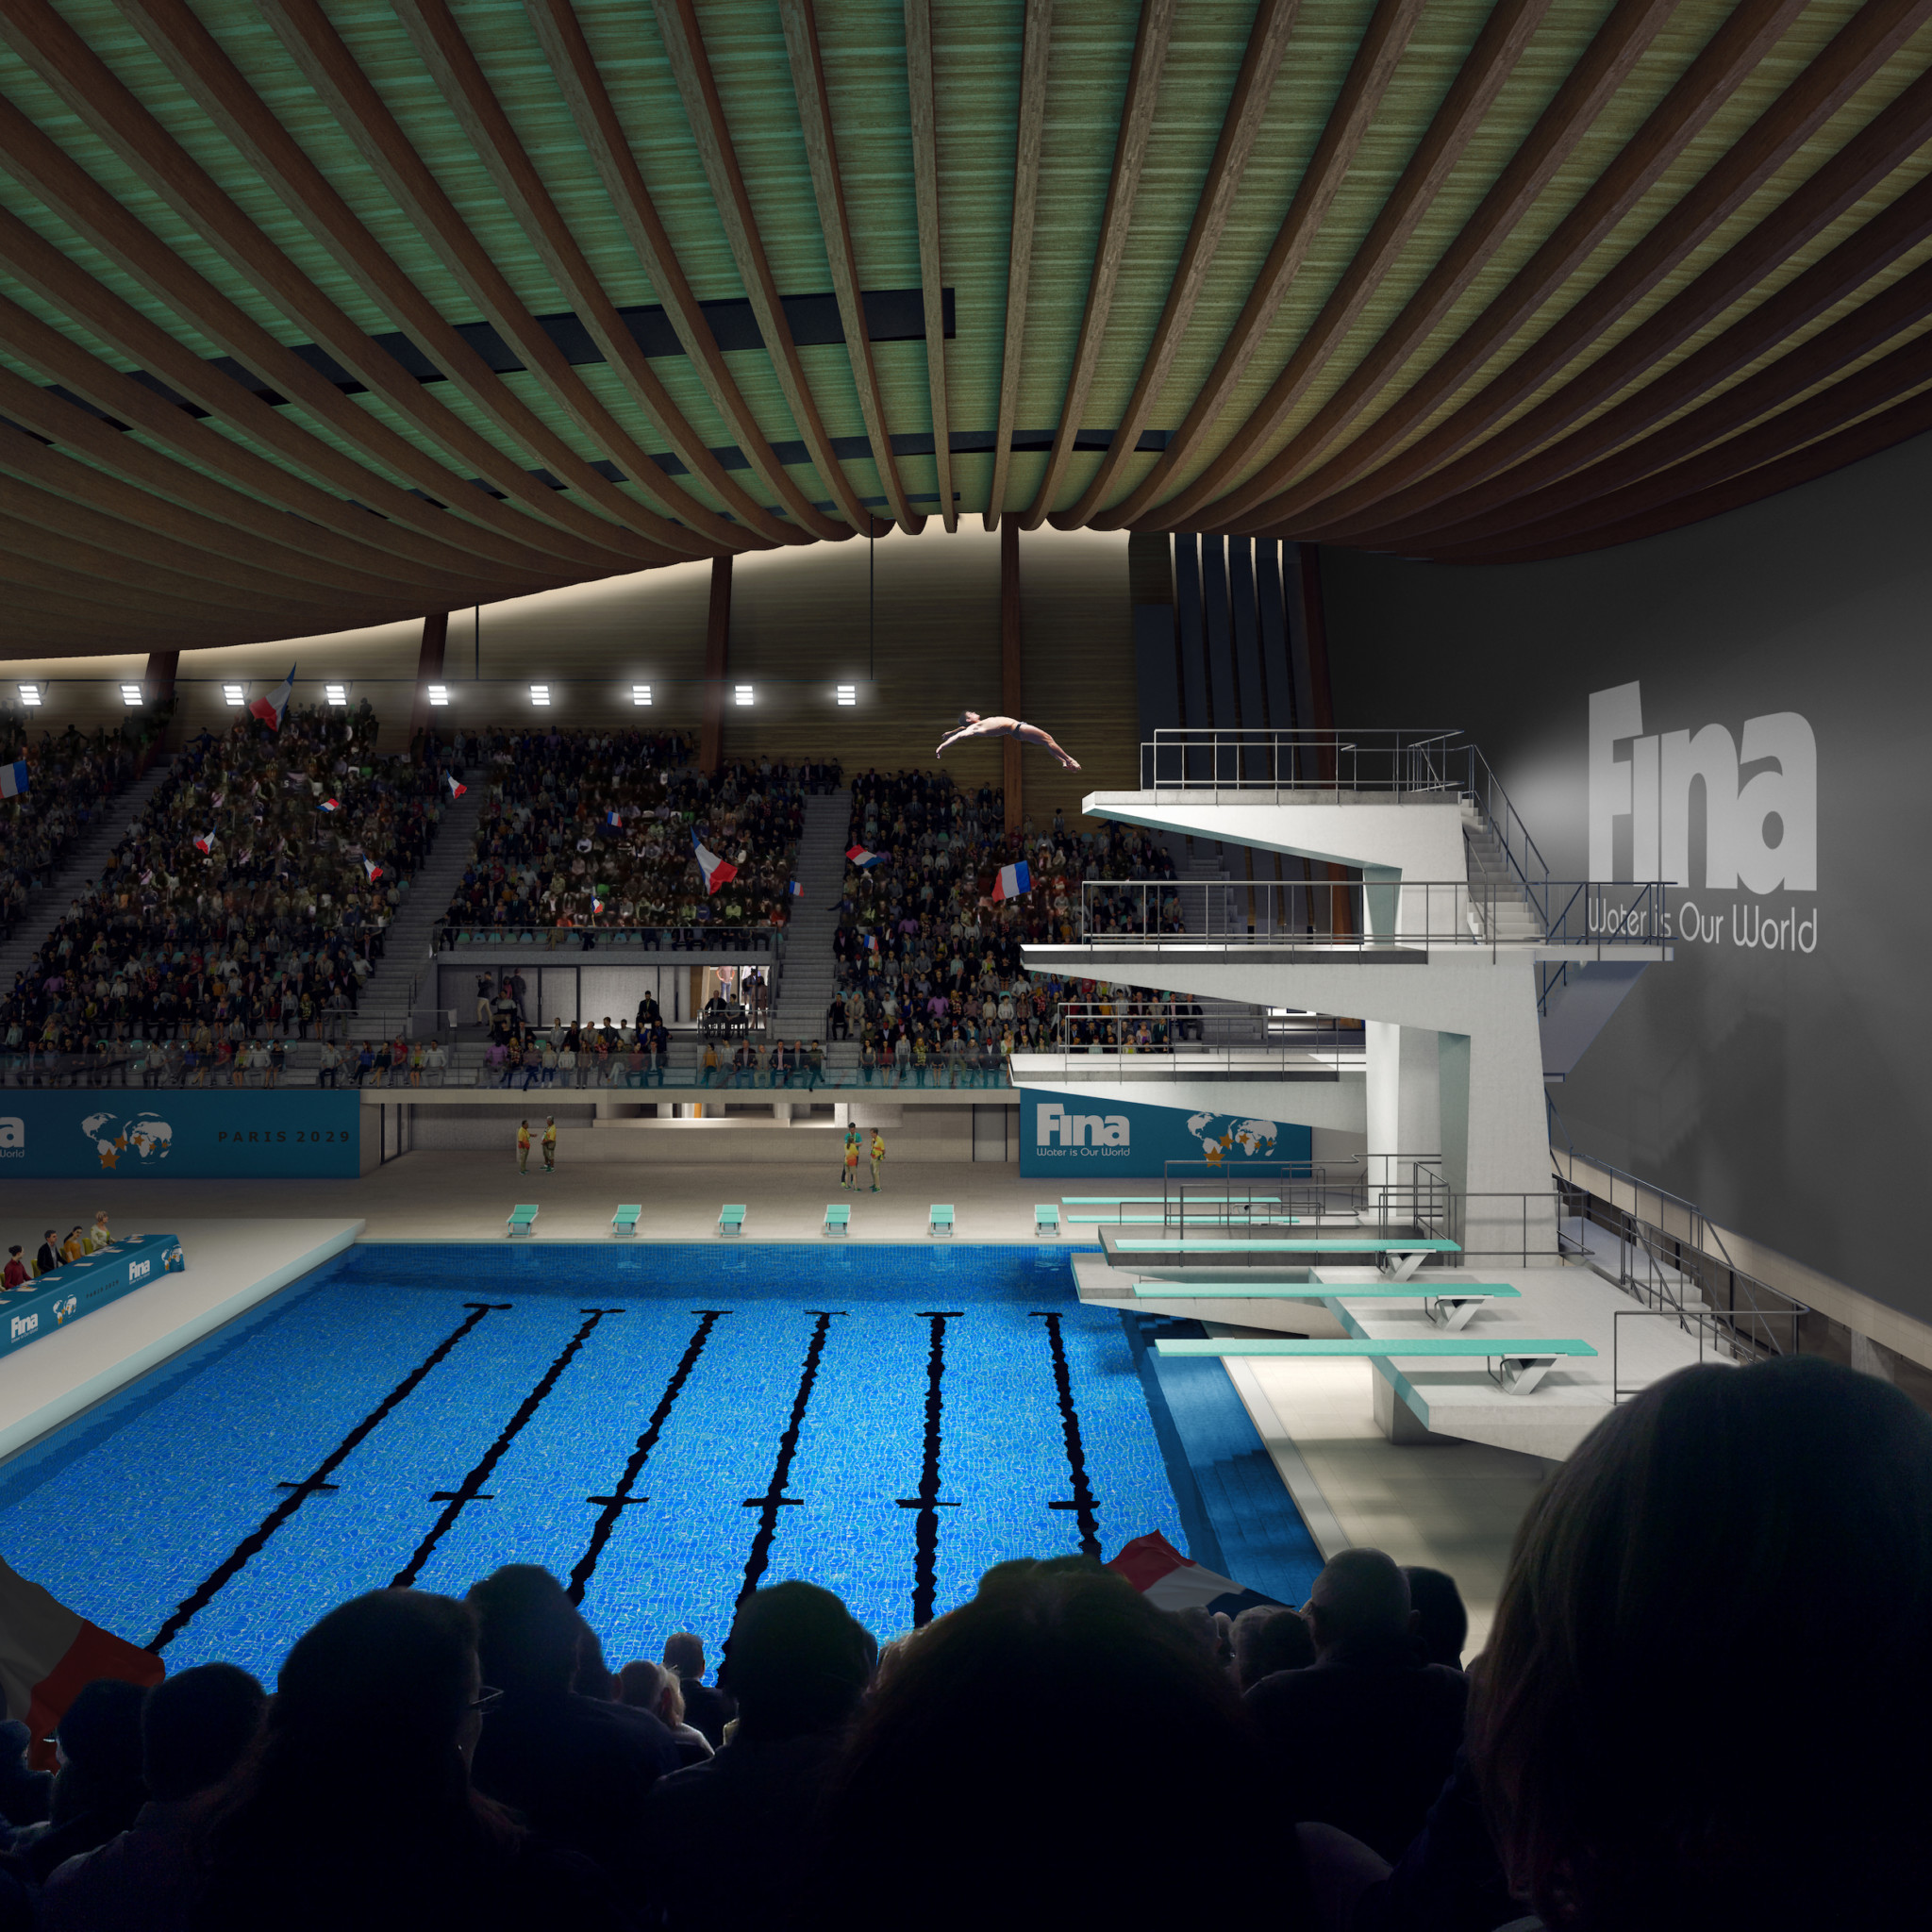 Dive into the winning design for the Paris 2024 Summer Olympics aquatic